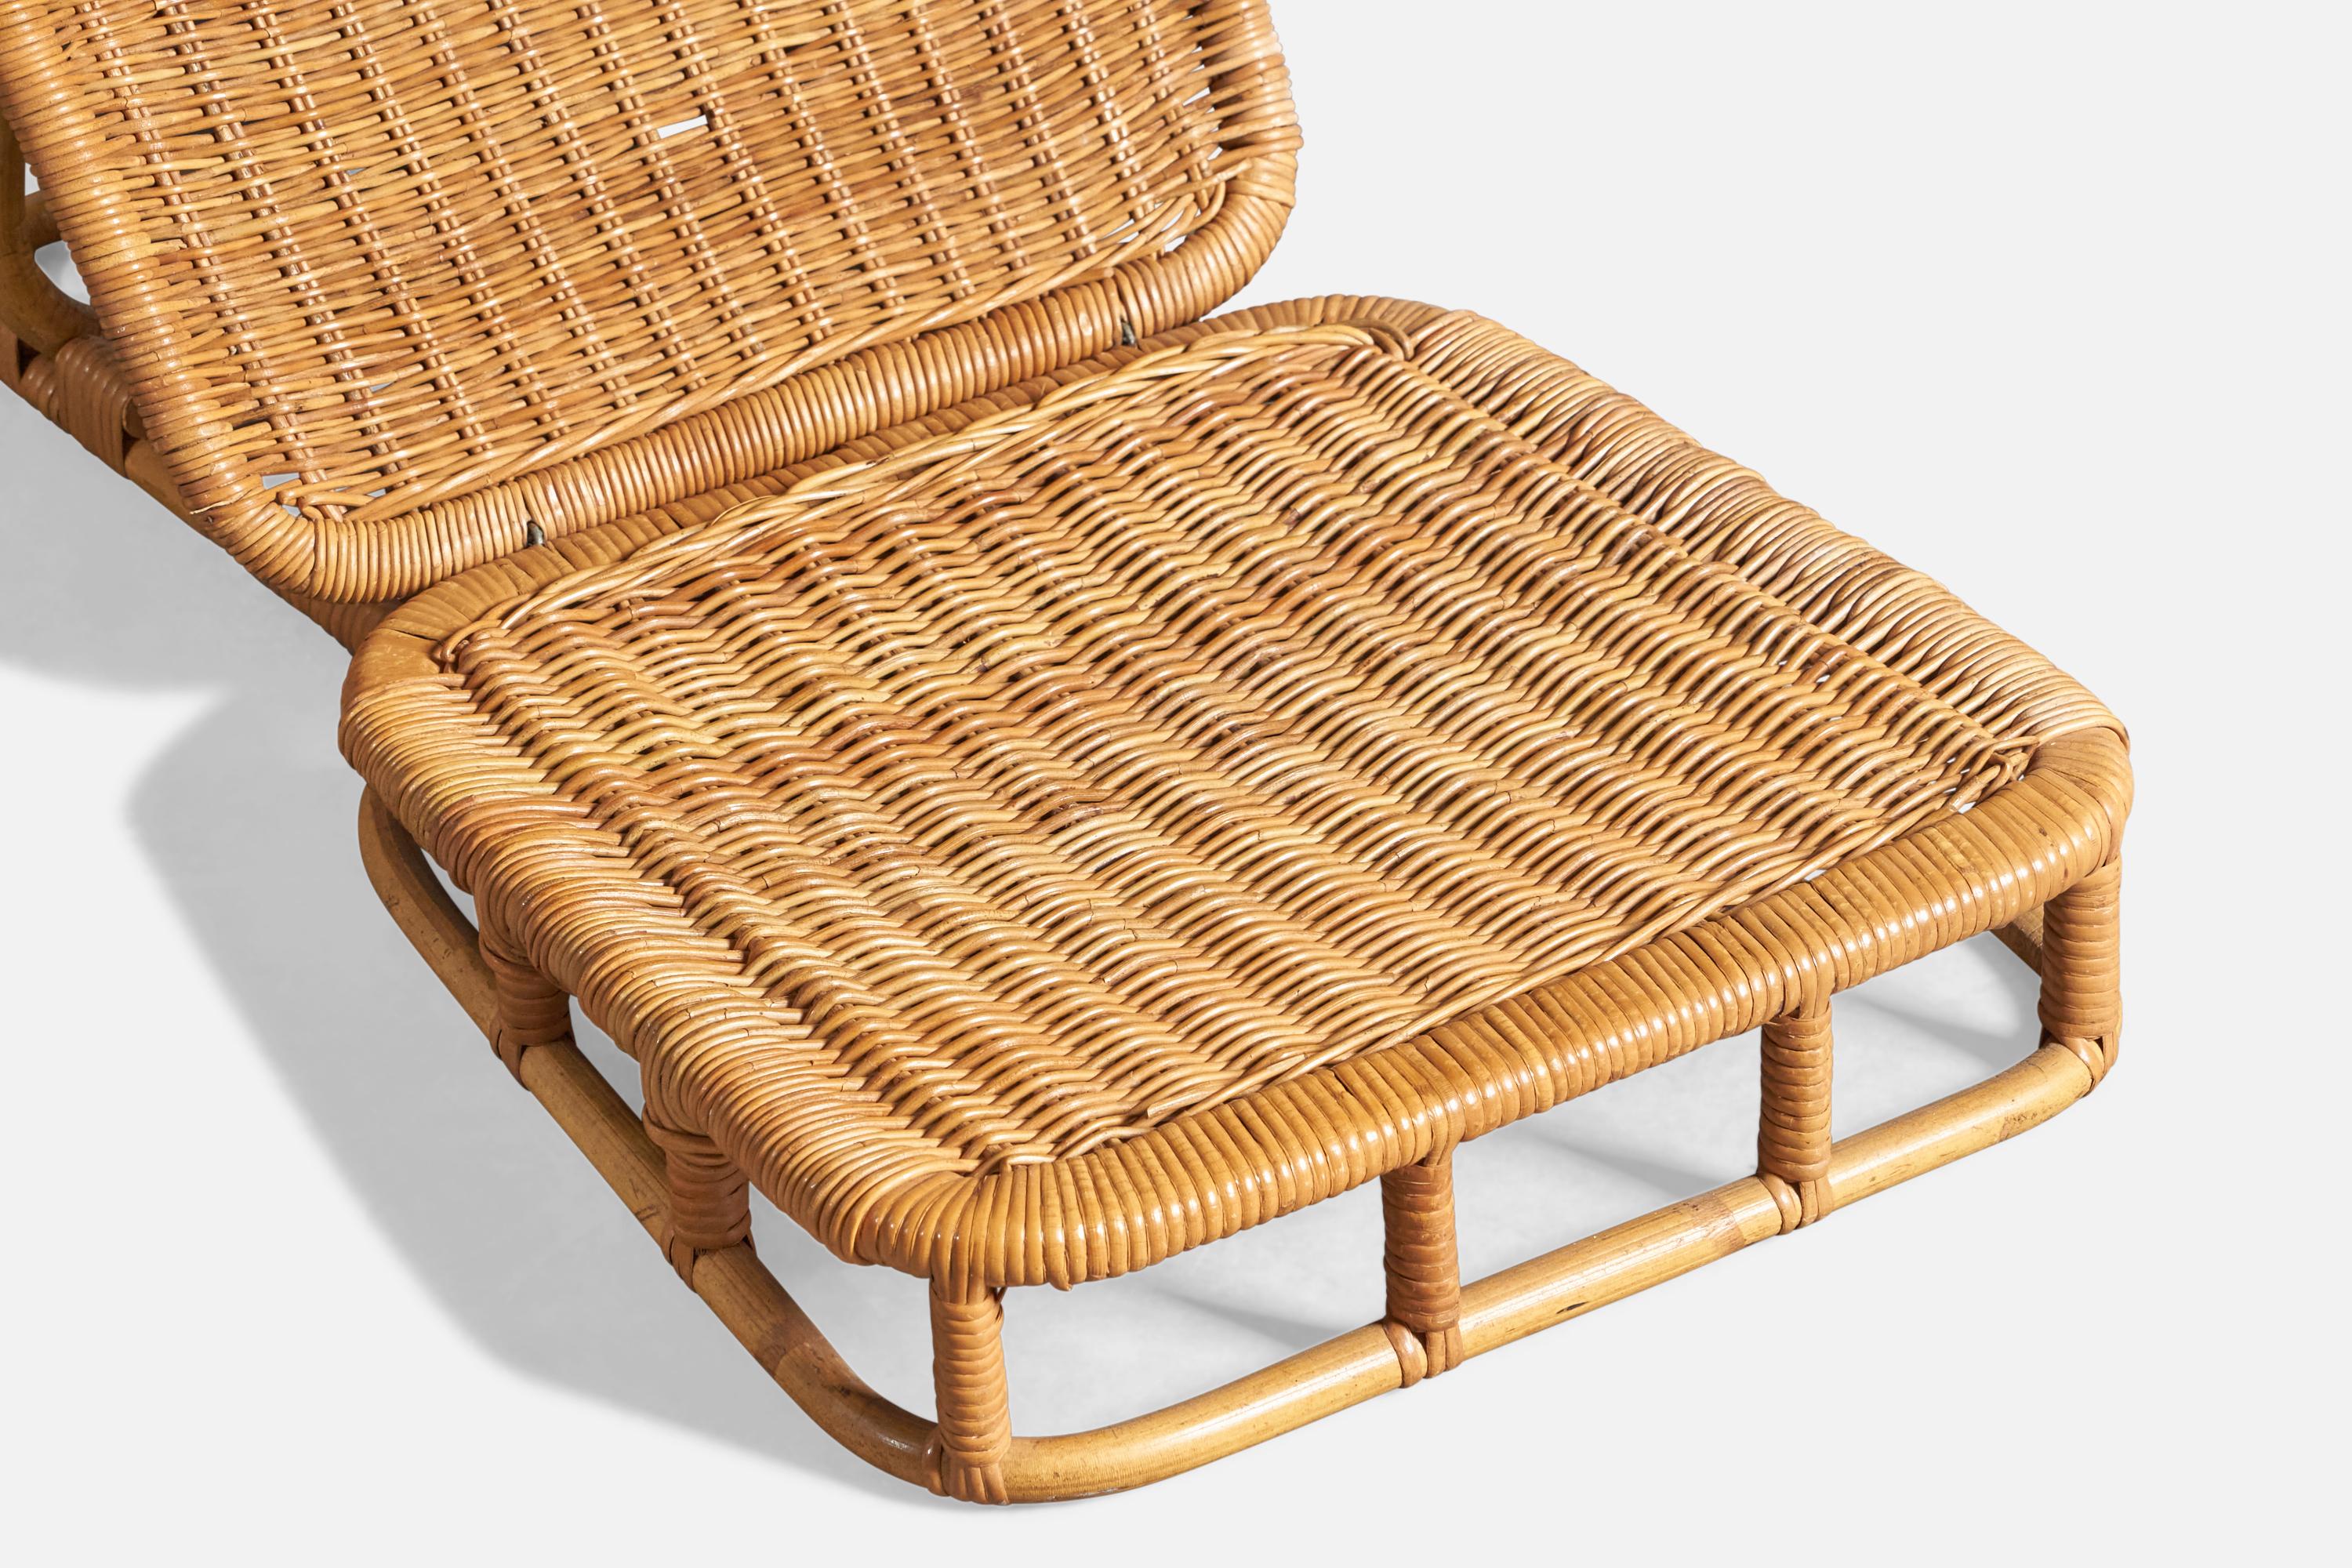 Calif-Asia, Lounge Chairs, Rattan, Bamboo, USA, 1950s 1